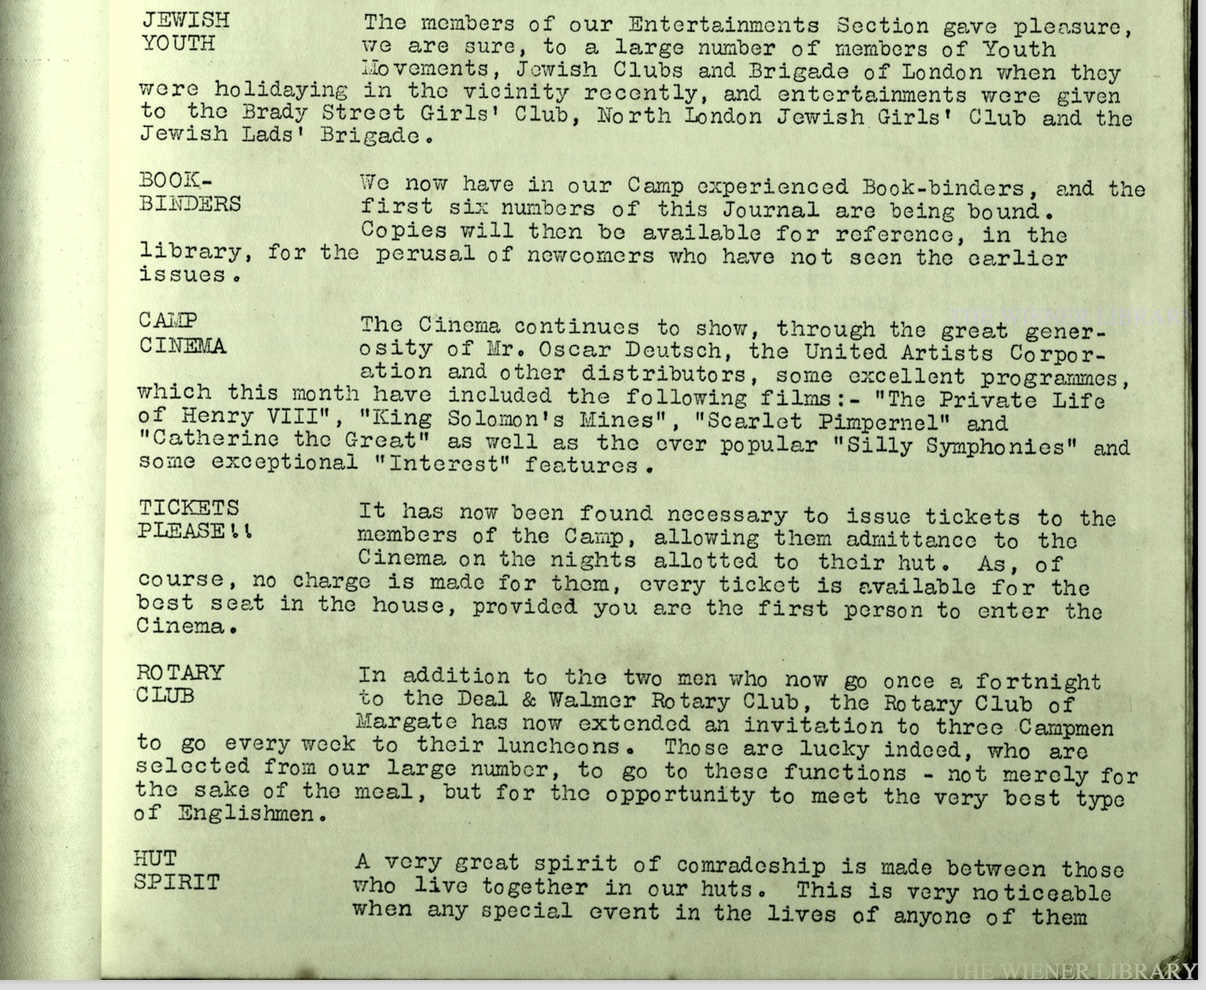 Kitchener Camp Review, no. 7, September 1939, page 2, base